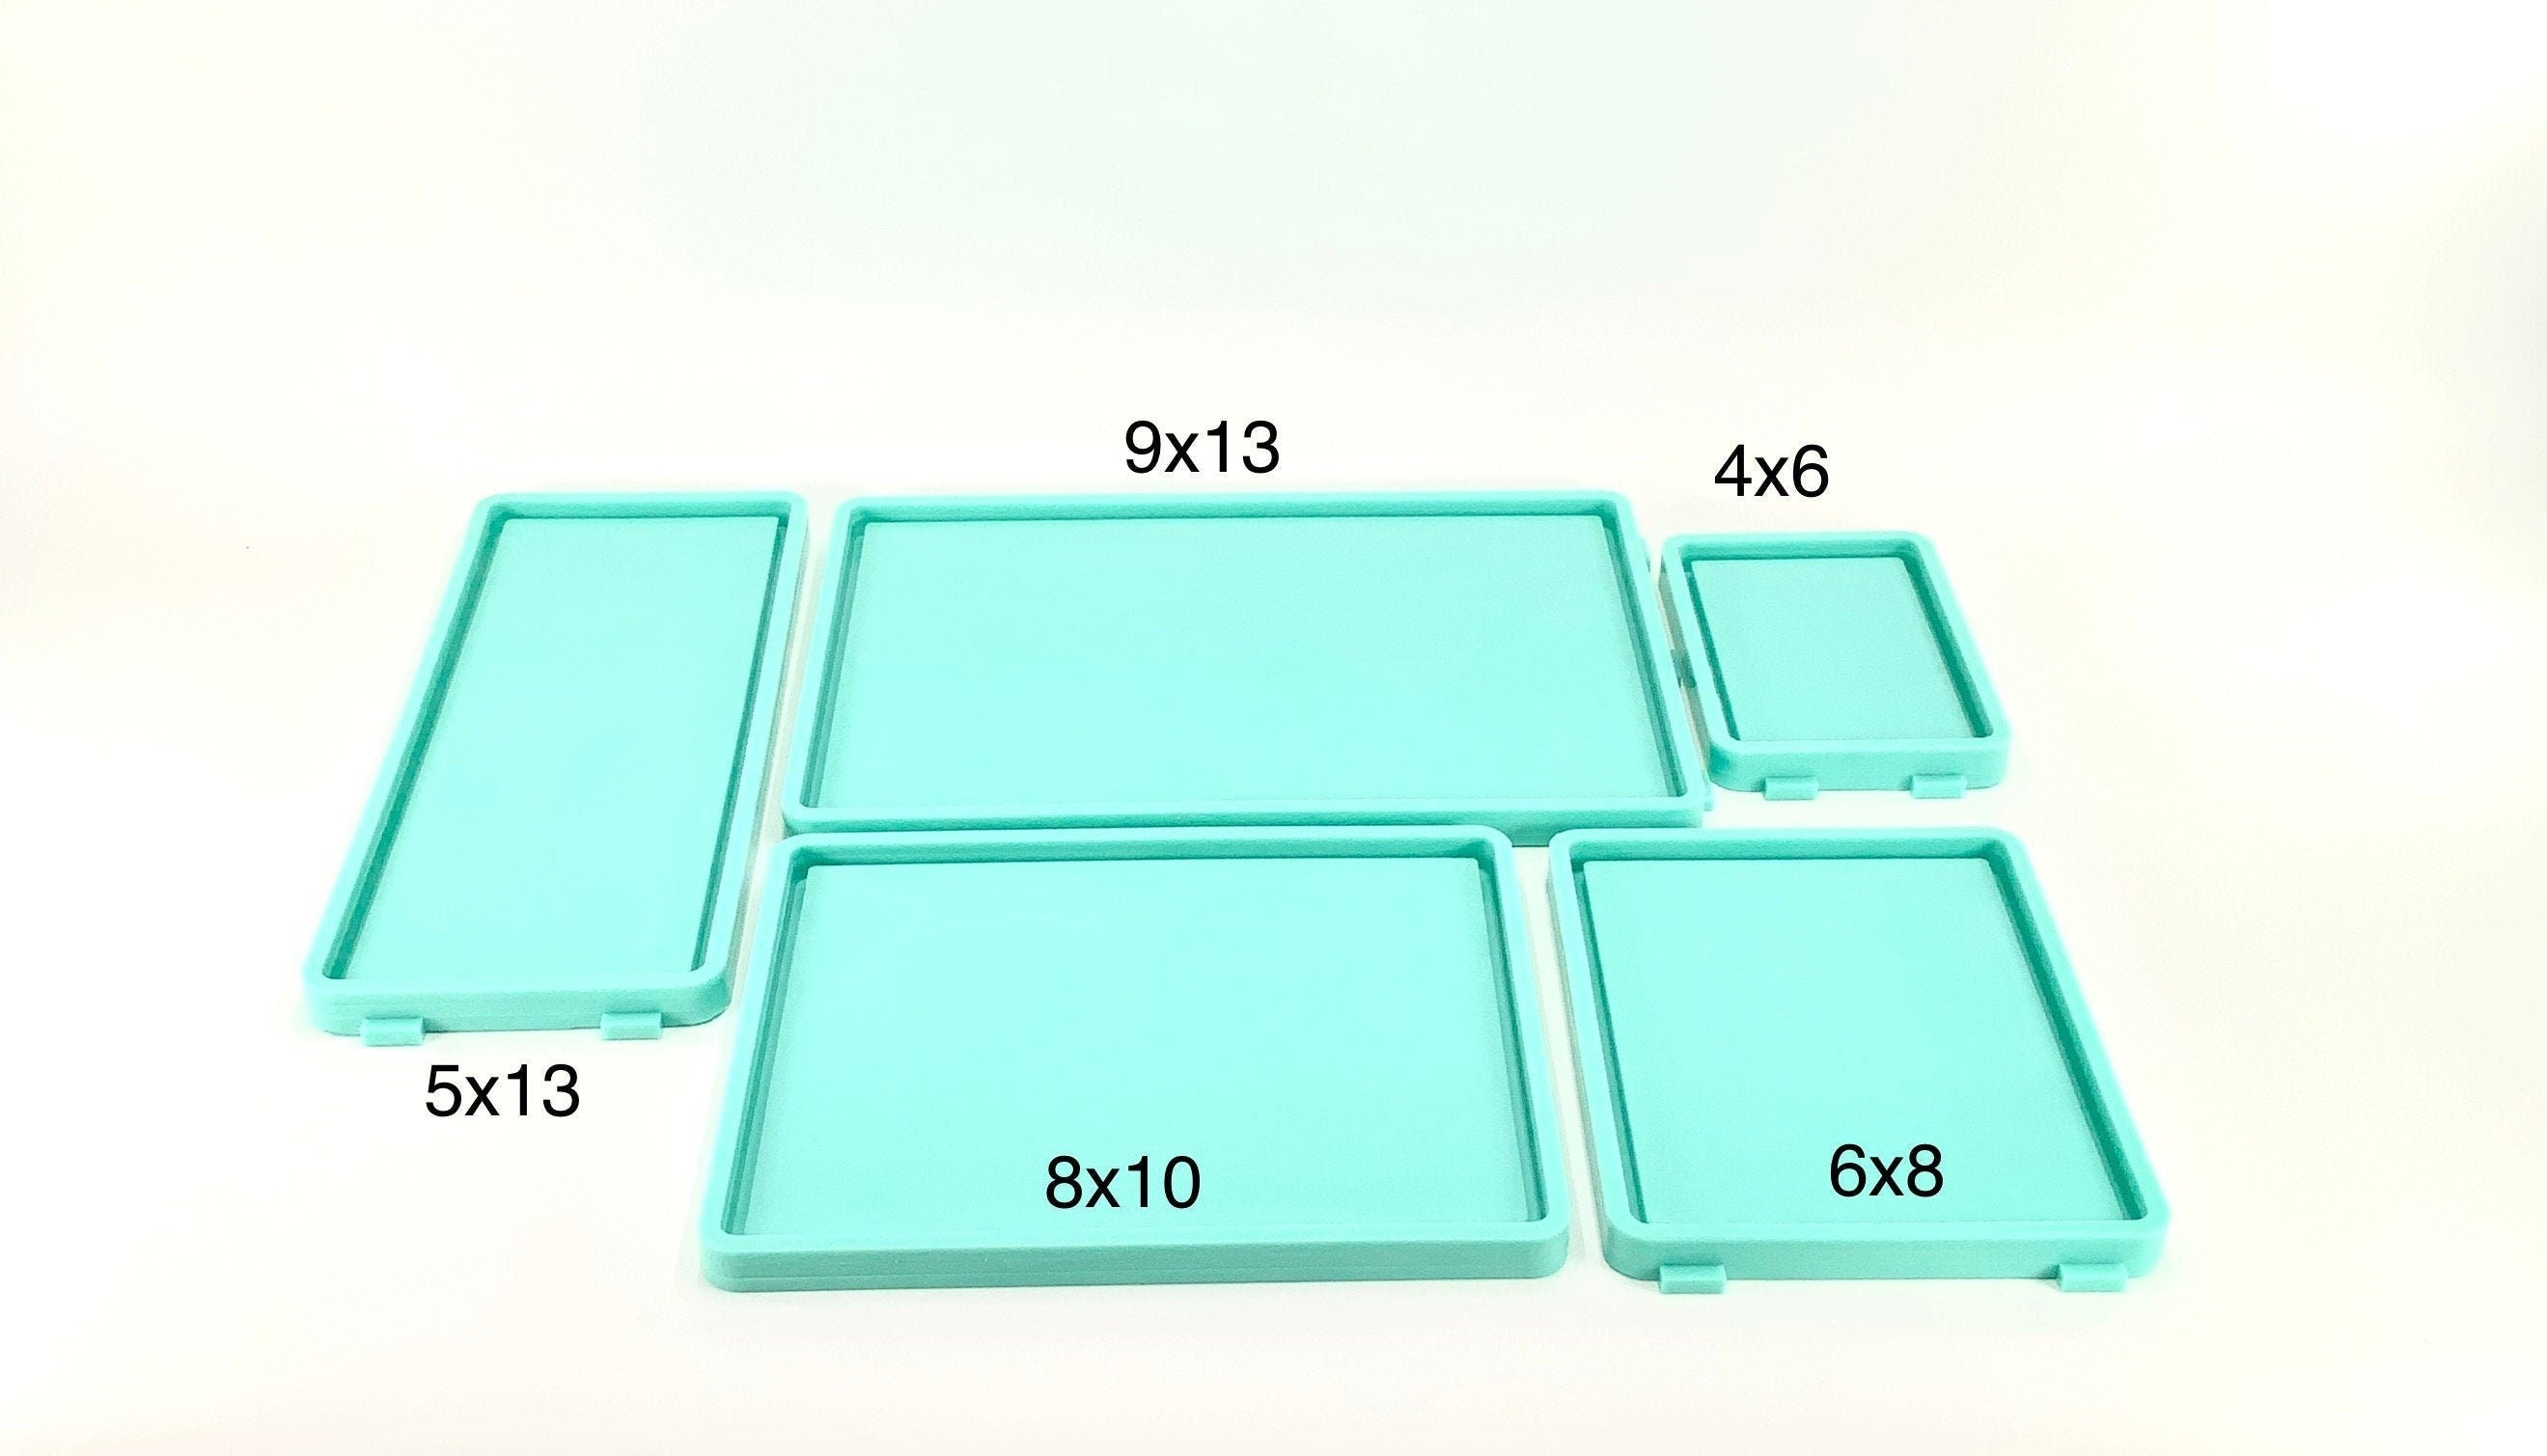 Rectangle Tray Mold  Sizes - 4x6, 6x8, 8x10, 5x13, 9x13